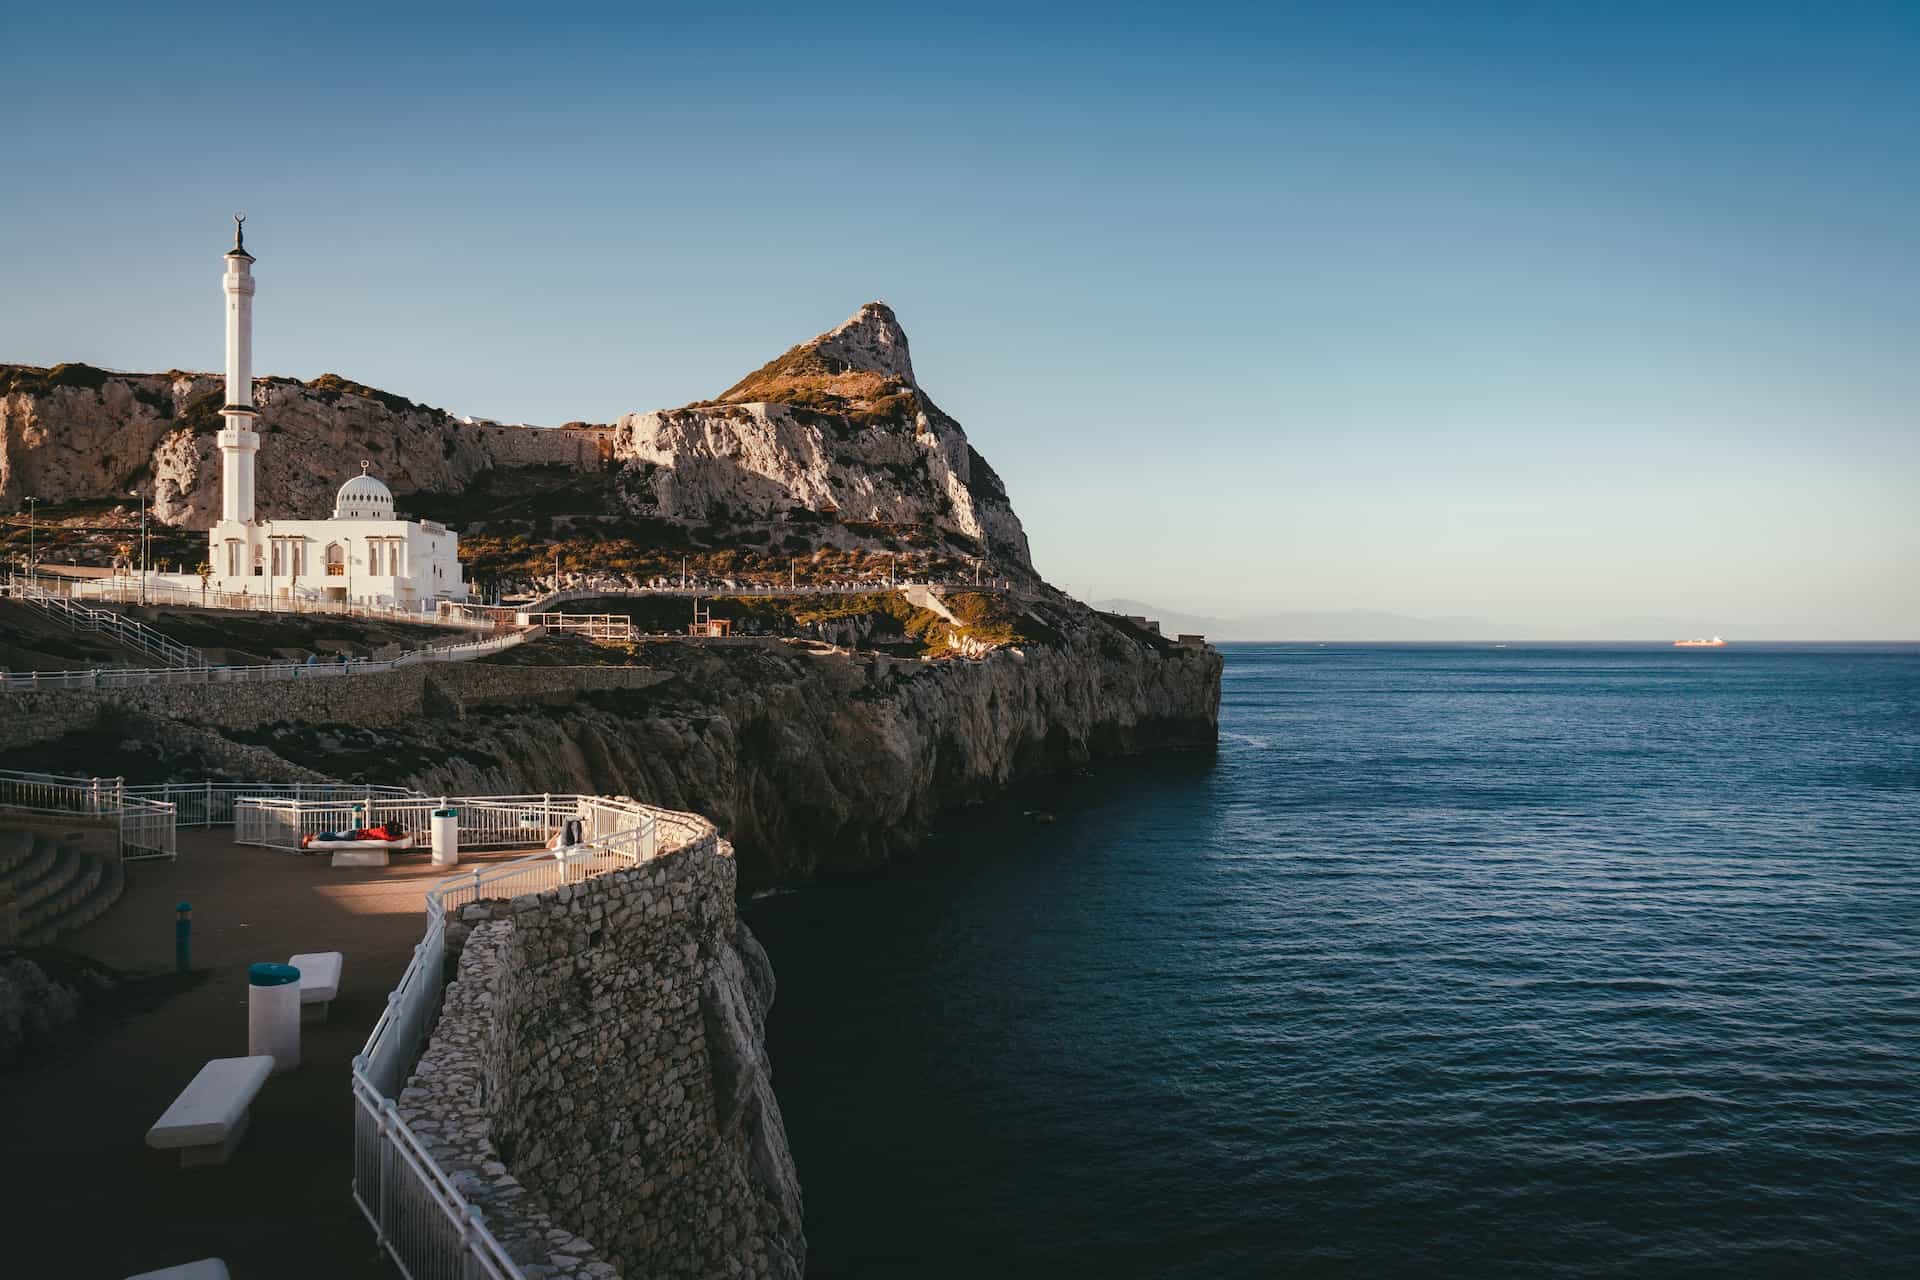 A church on a cliff near the sea.